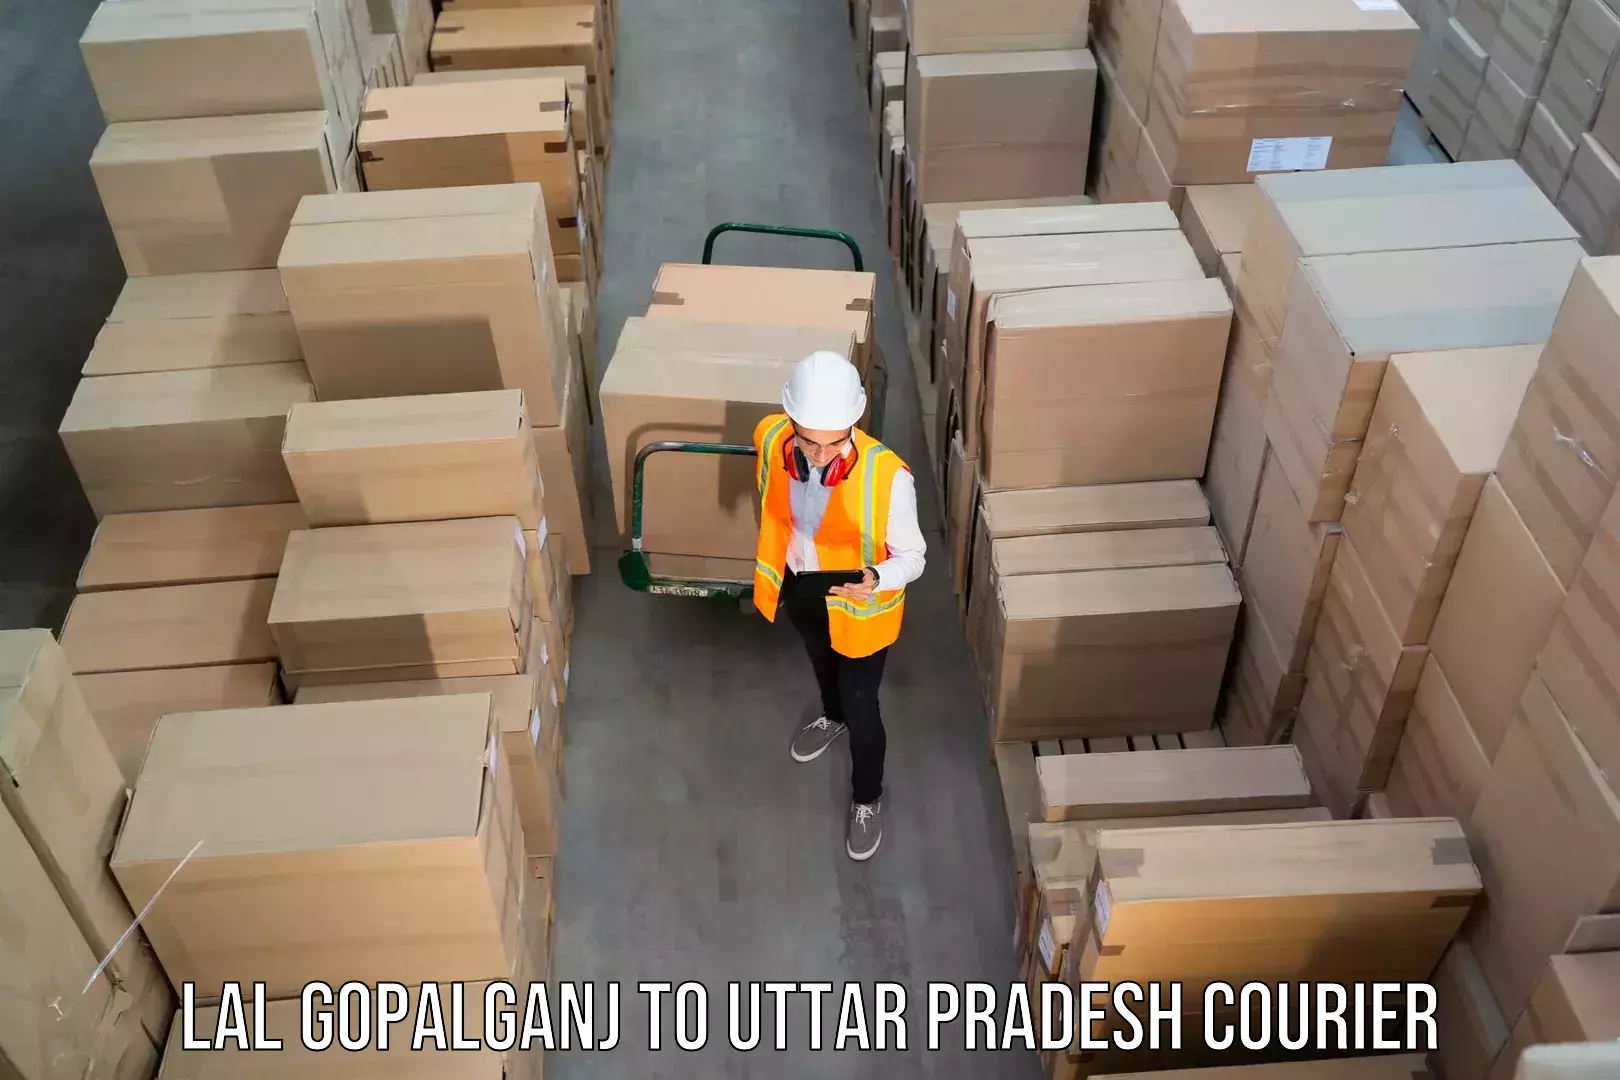 Digital courier platforms Lal Gopalganj to Faridpur